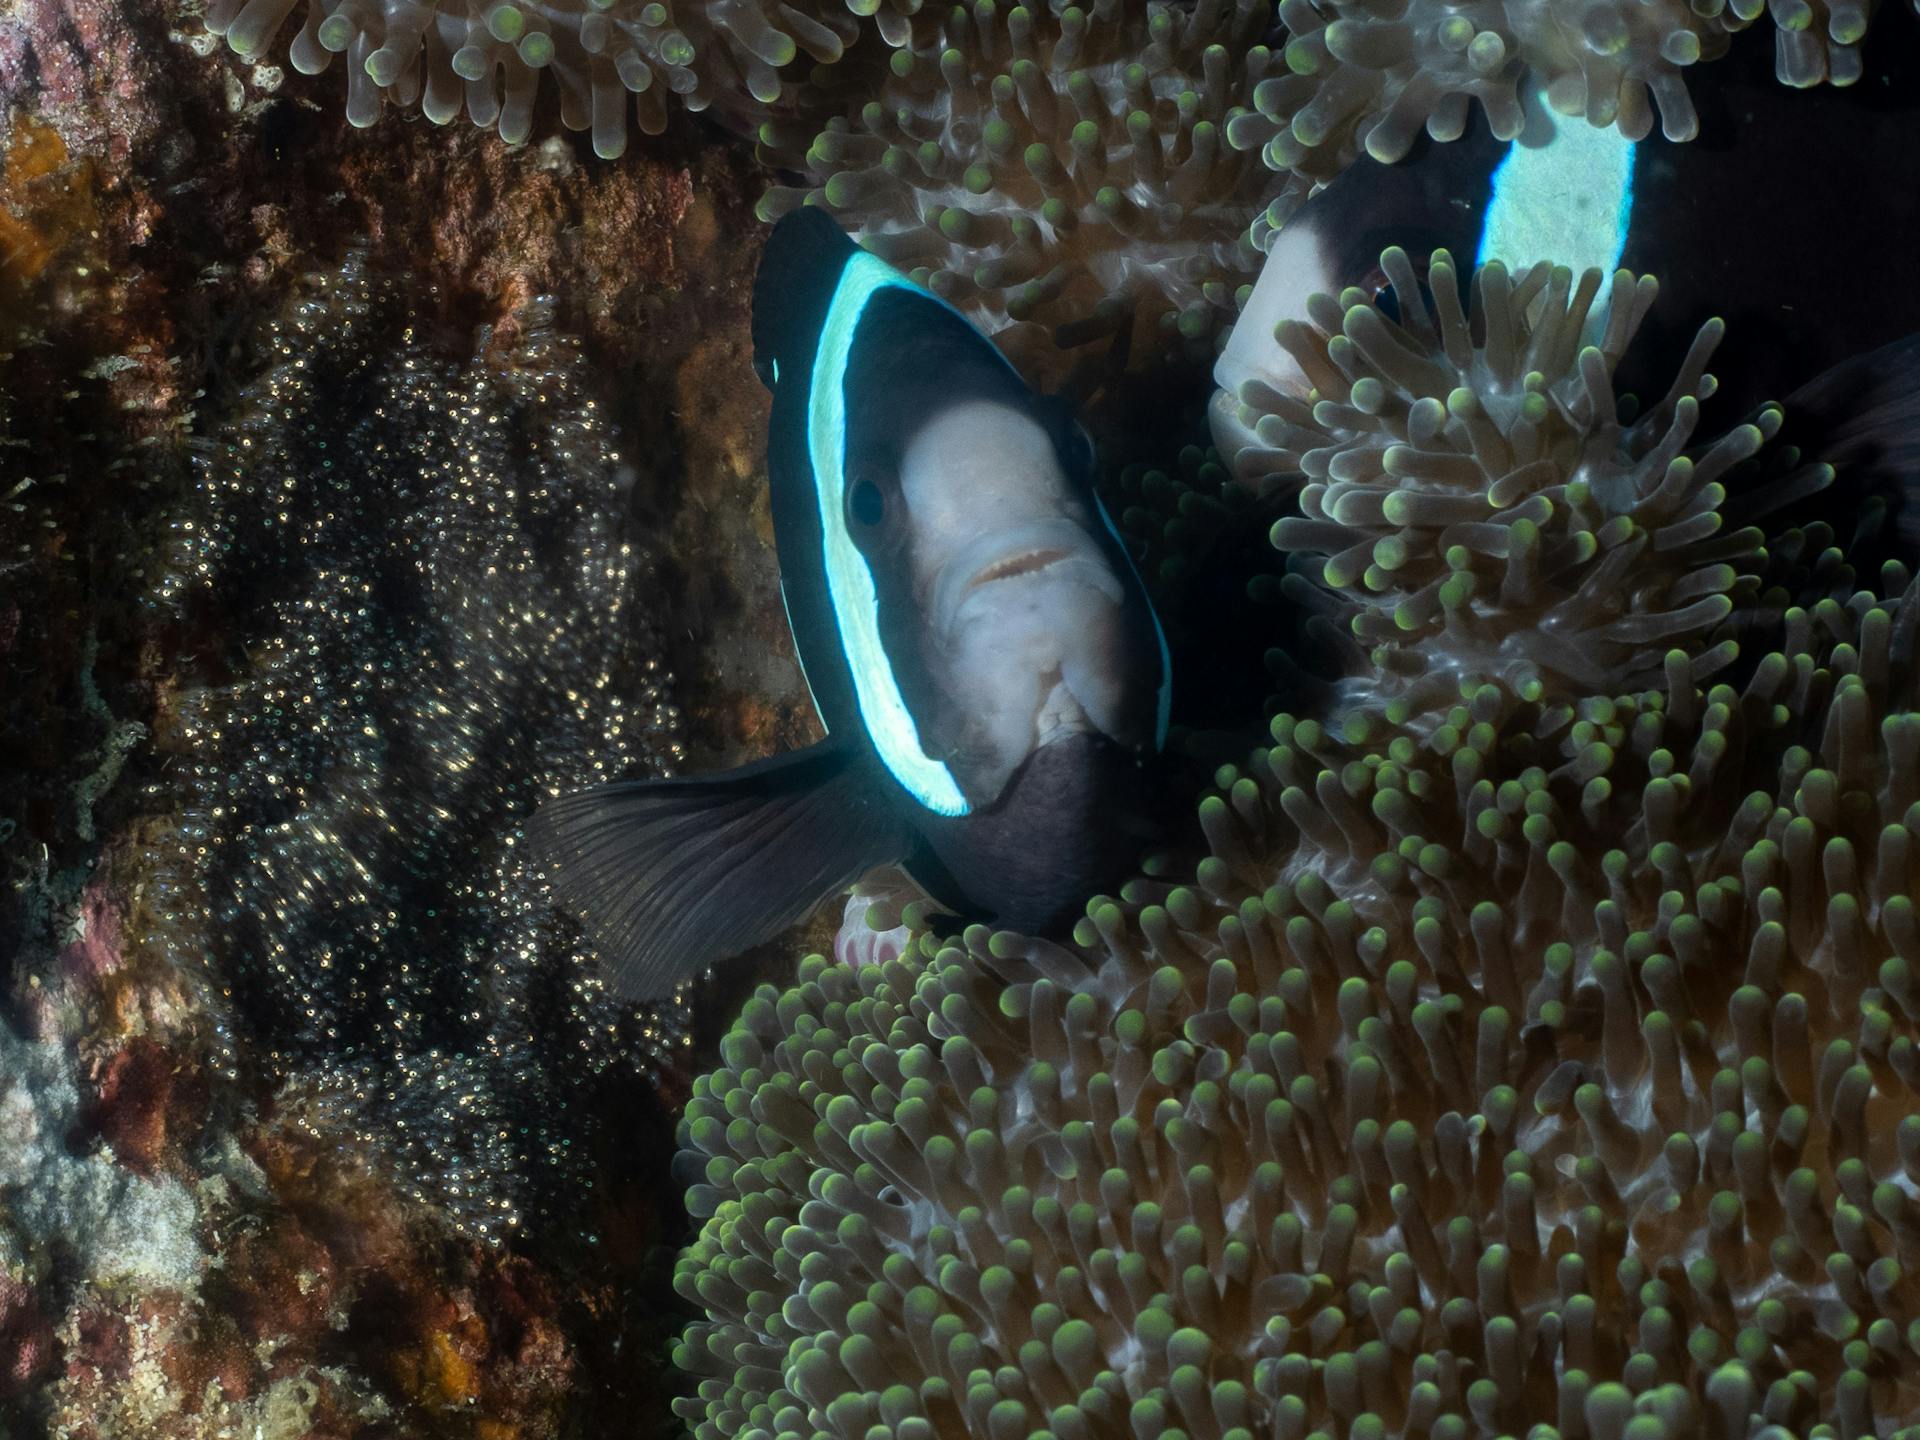 Clownfish guarding its eggs